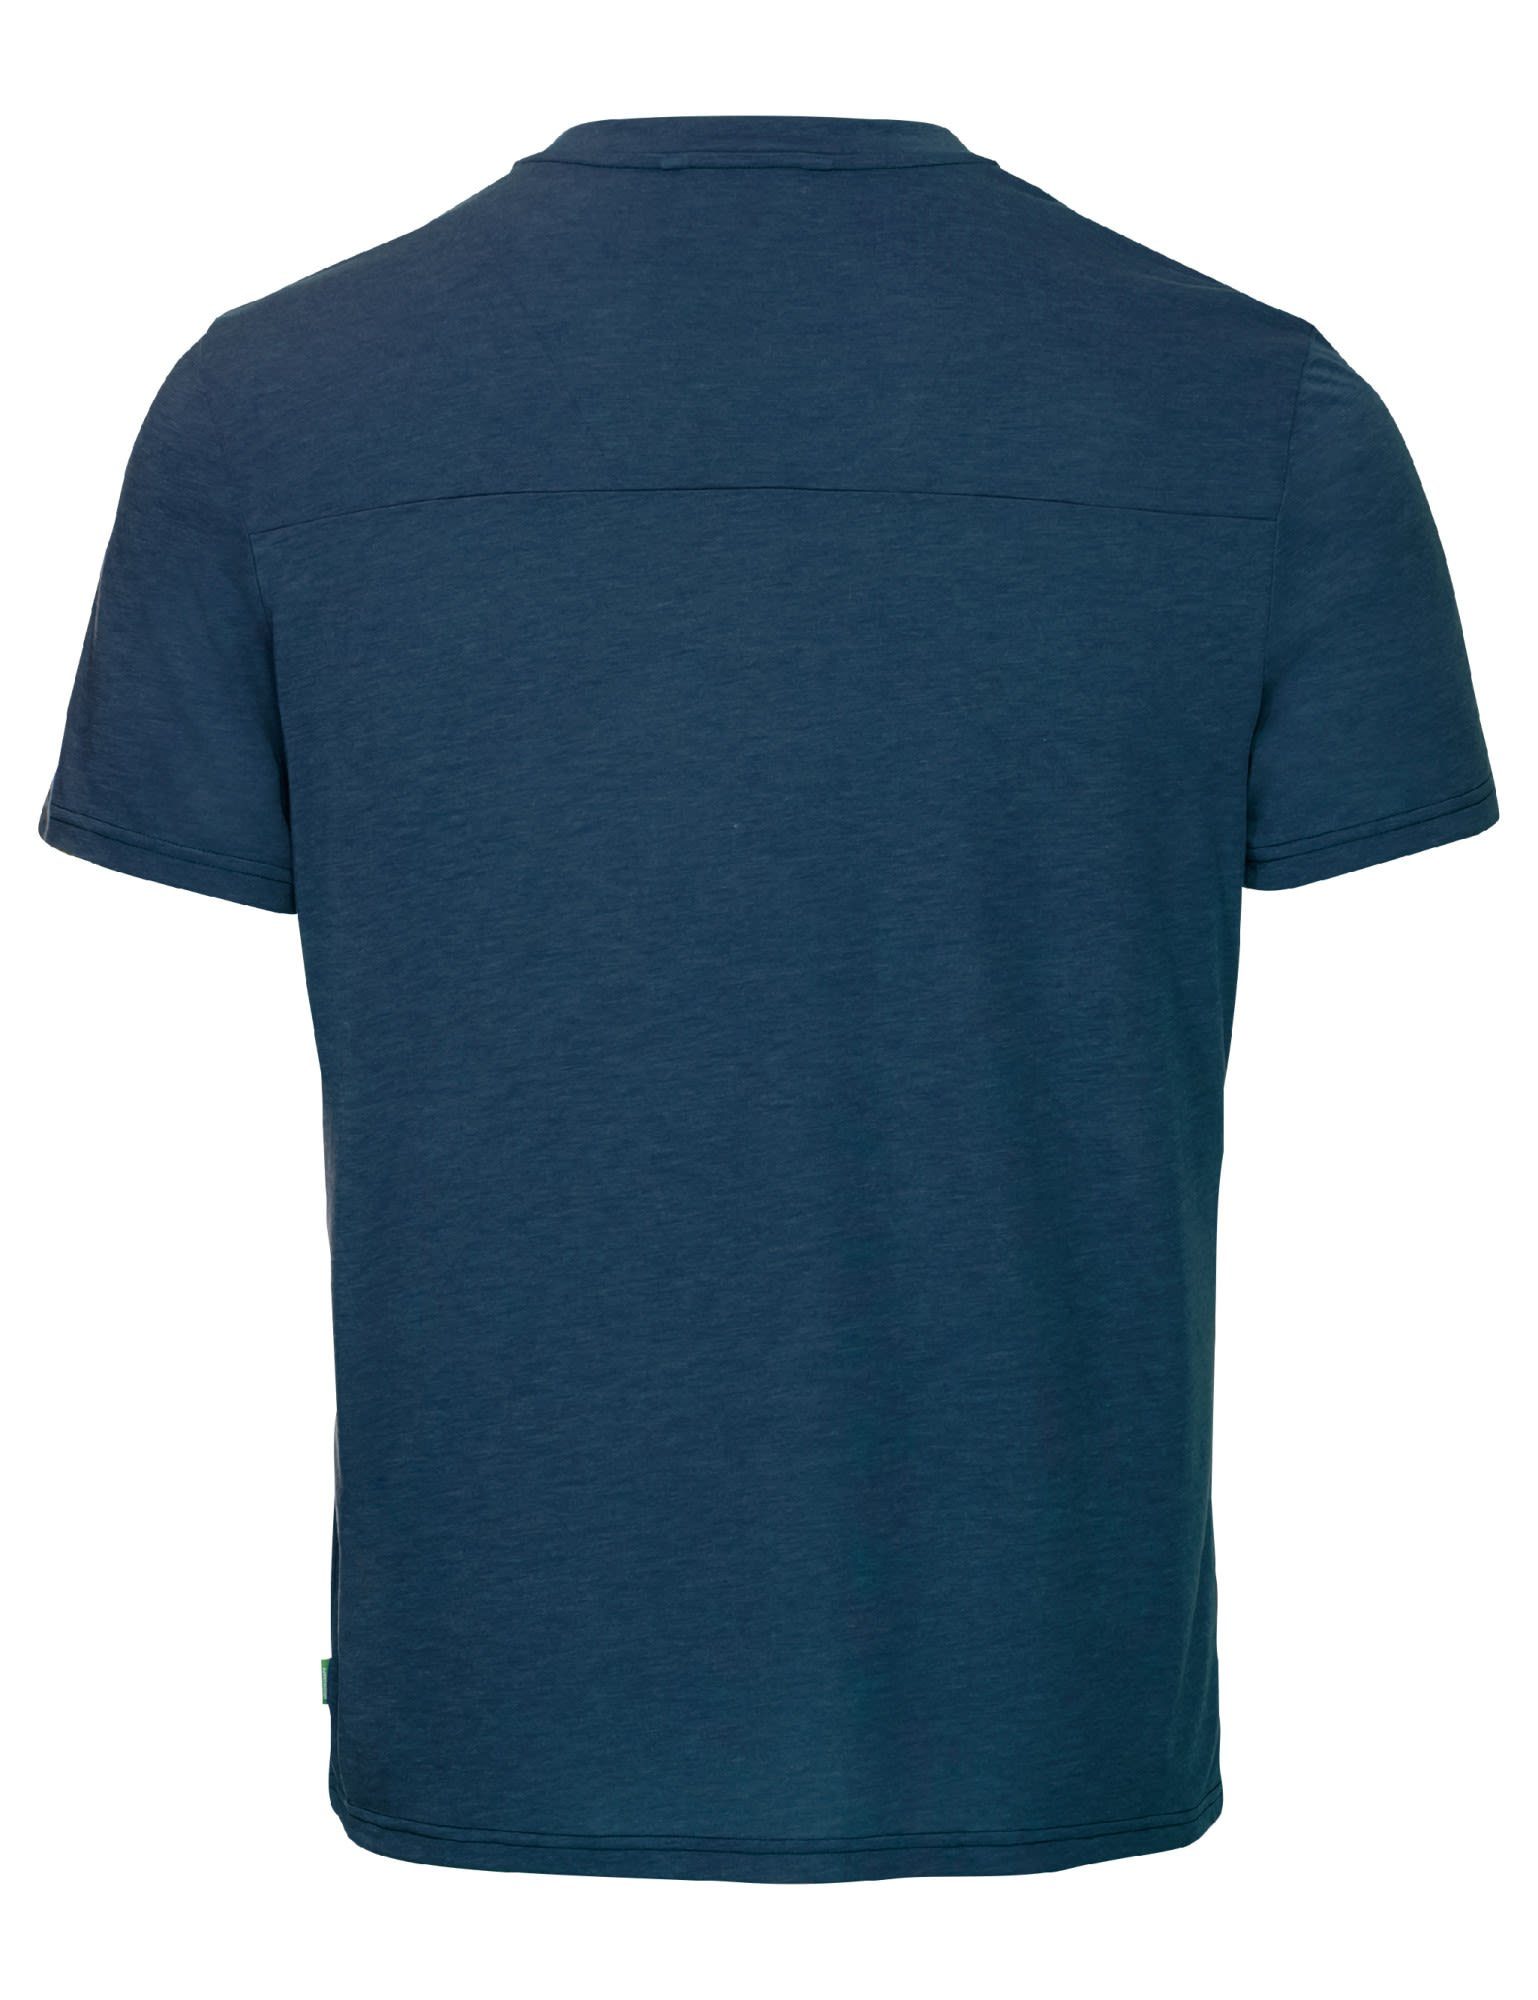 Kurzarm-Shirt Vaude Mens Sea T-shirt T-Shirt Dark - VAUDE Blue Iii Herren Tekoa